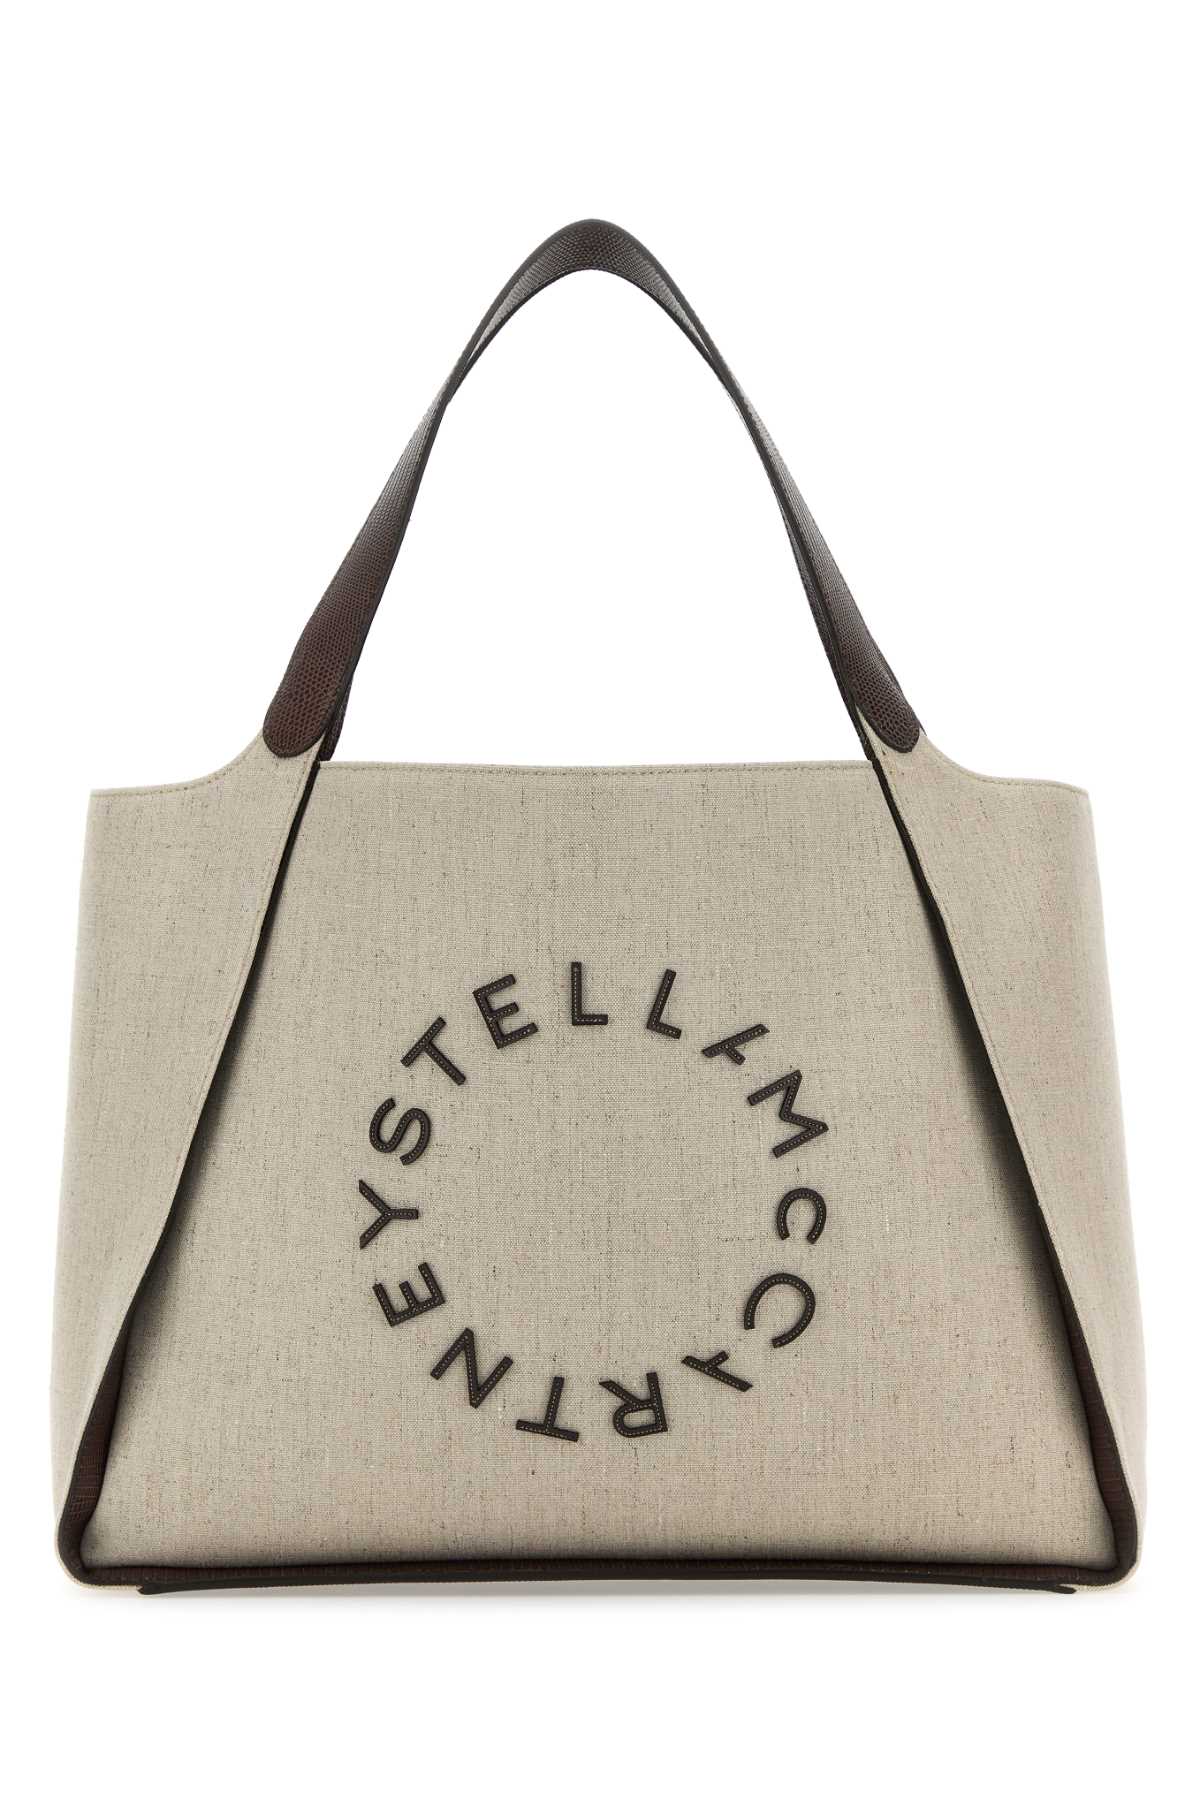 Stella Mccartney Handbags. In Birch